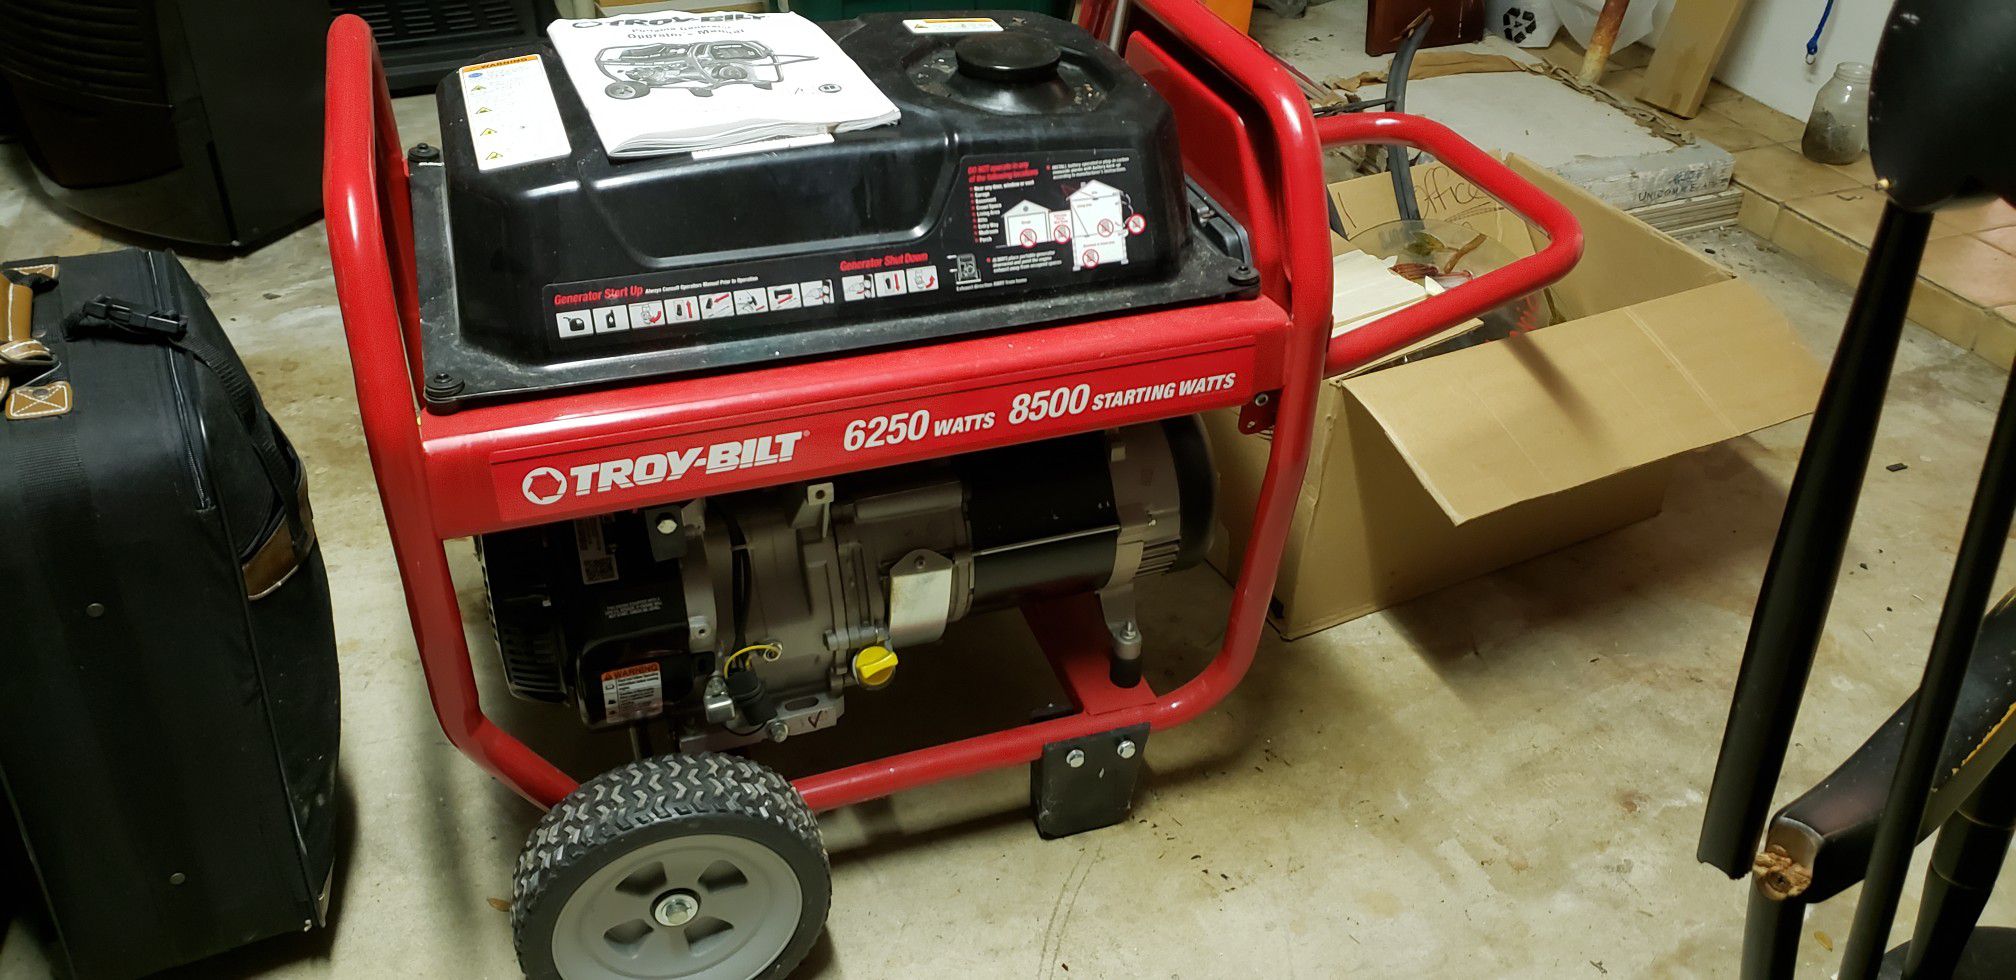 Troy Bilt Portable Generator 8500 Starting Watts 6250 Watts